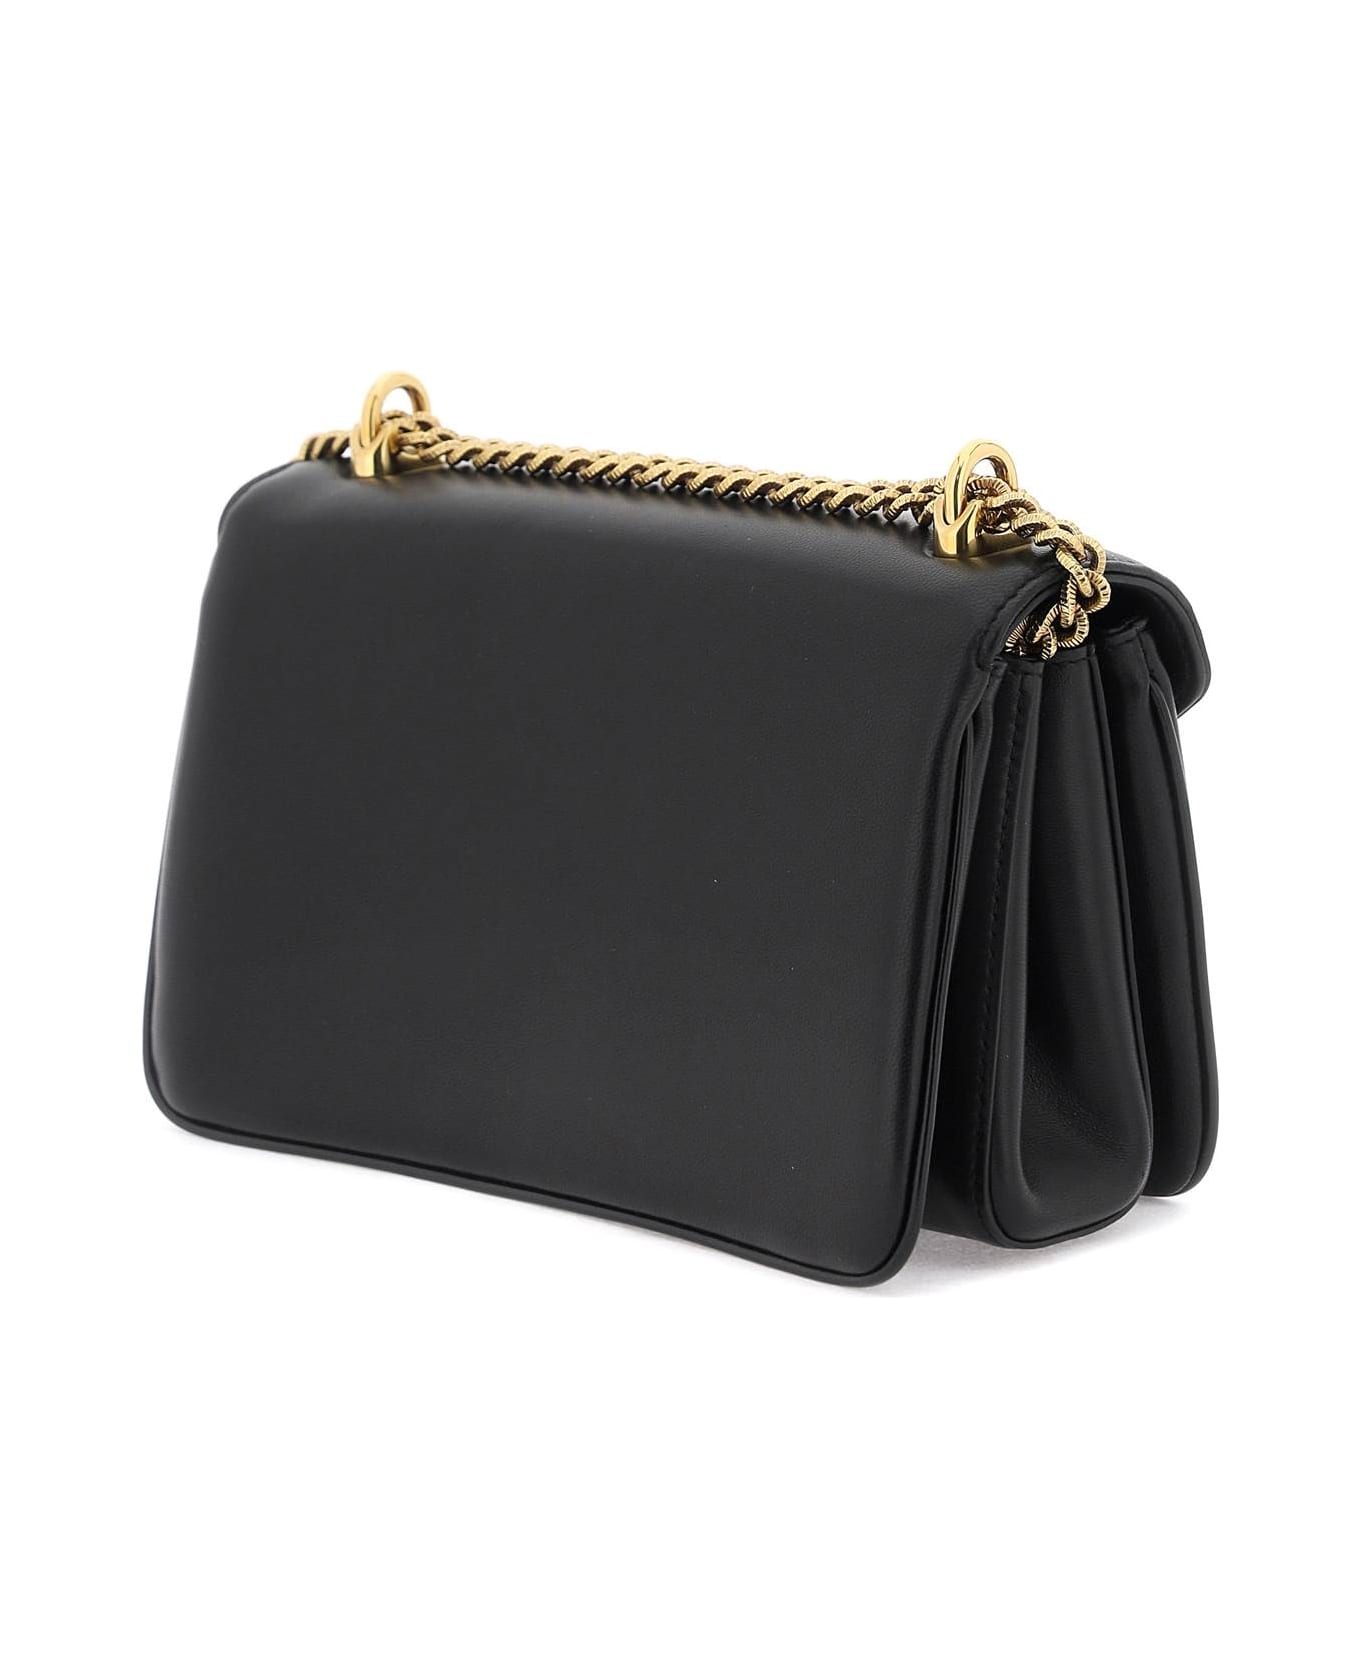 Dolce & Gabbana Black Nappa Leather Devotion Shoulder Bag - Black ショルダーバッグ